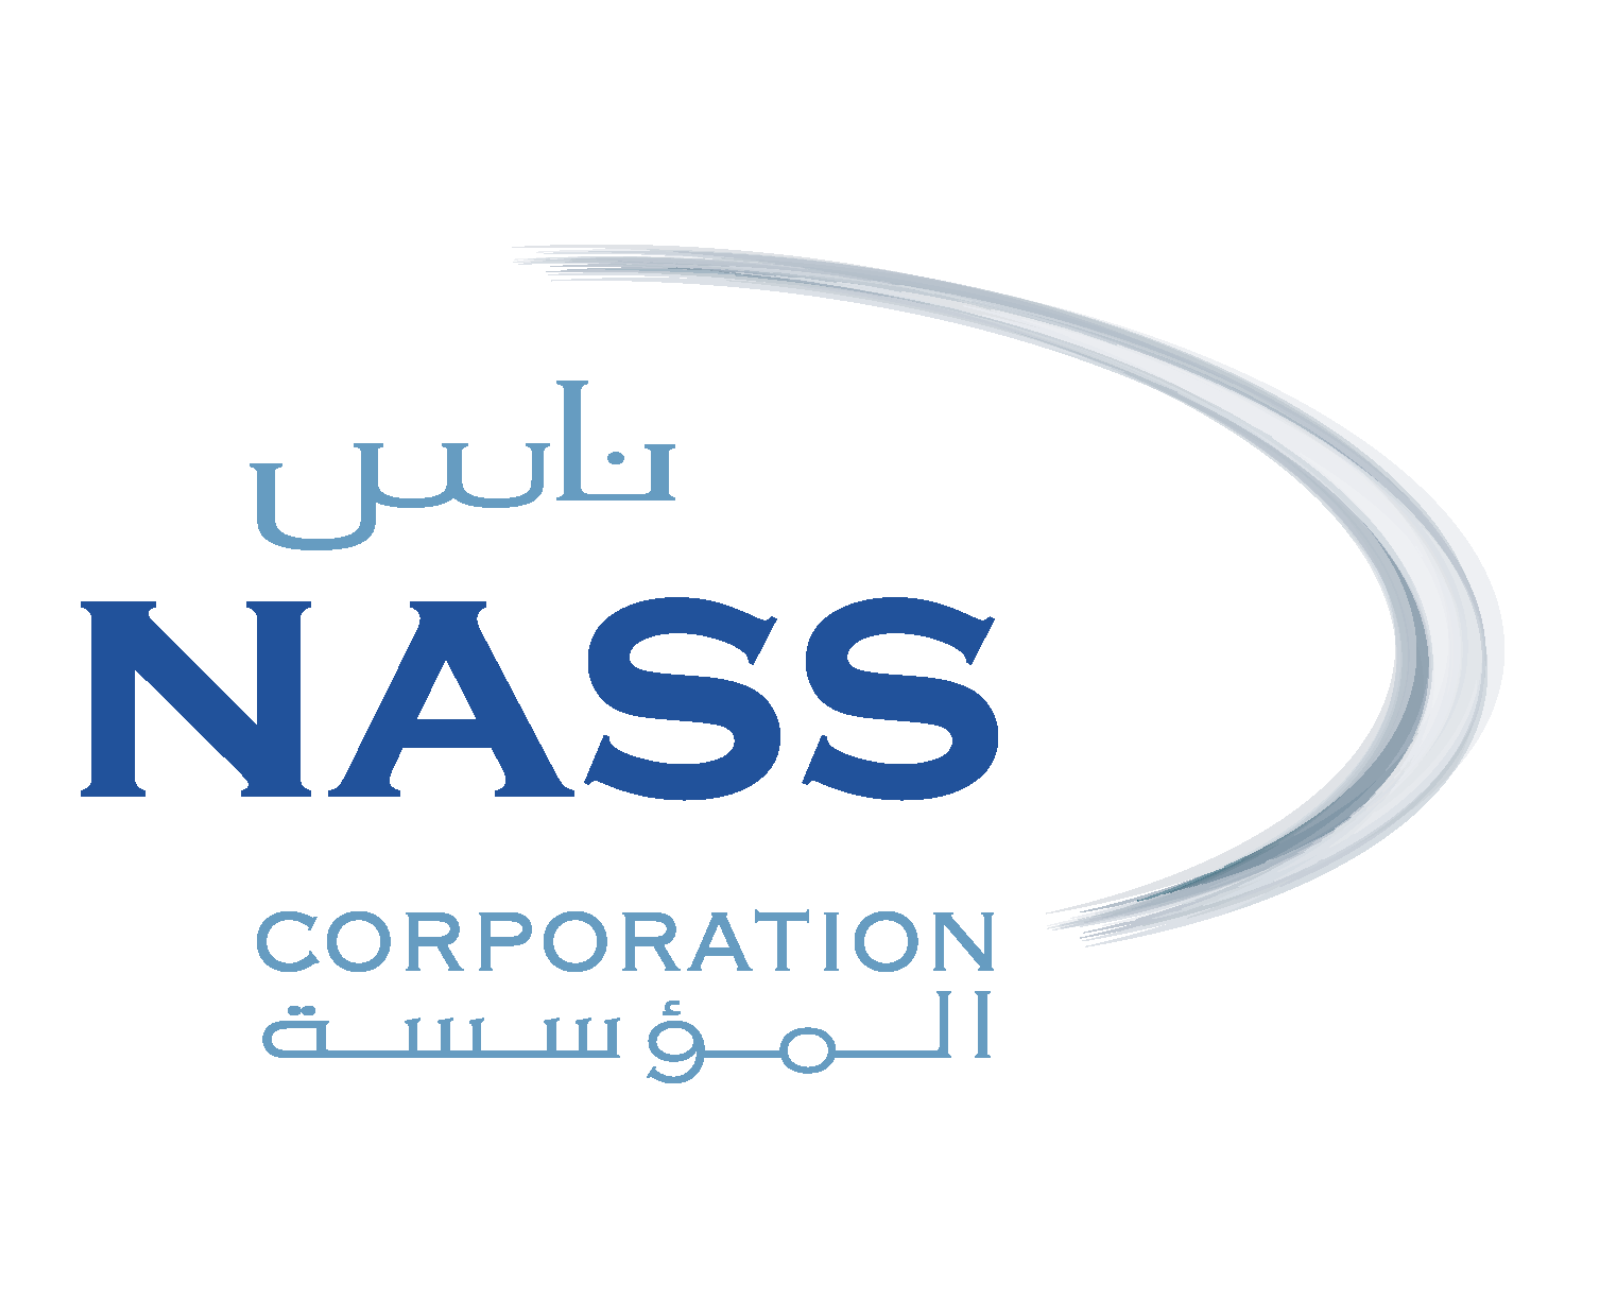 Nass Corporation